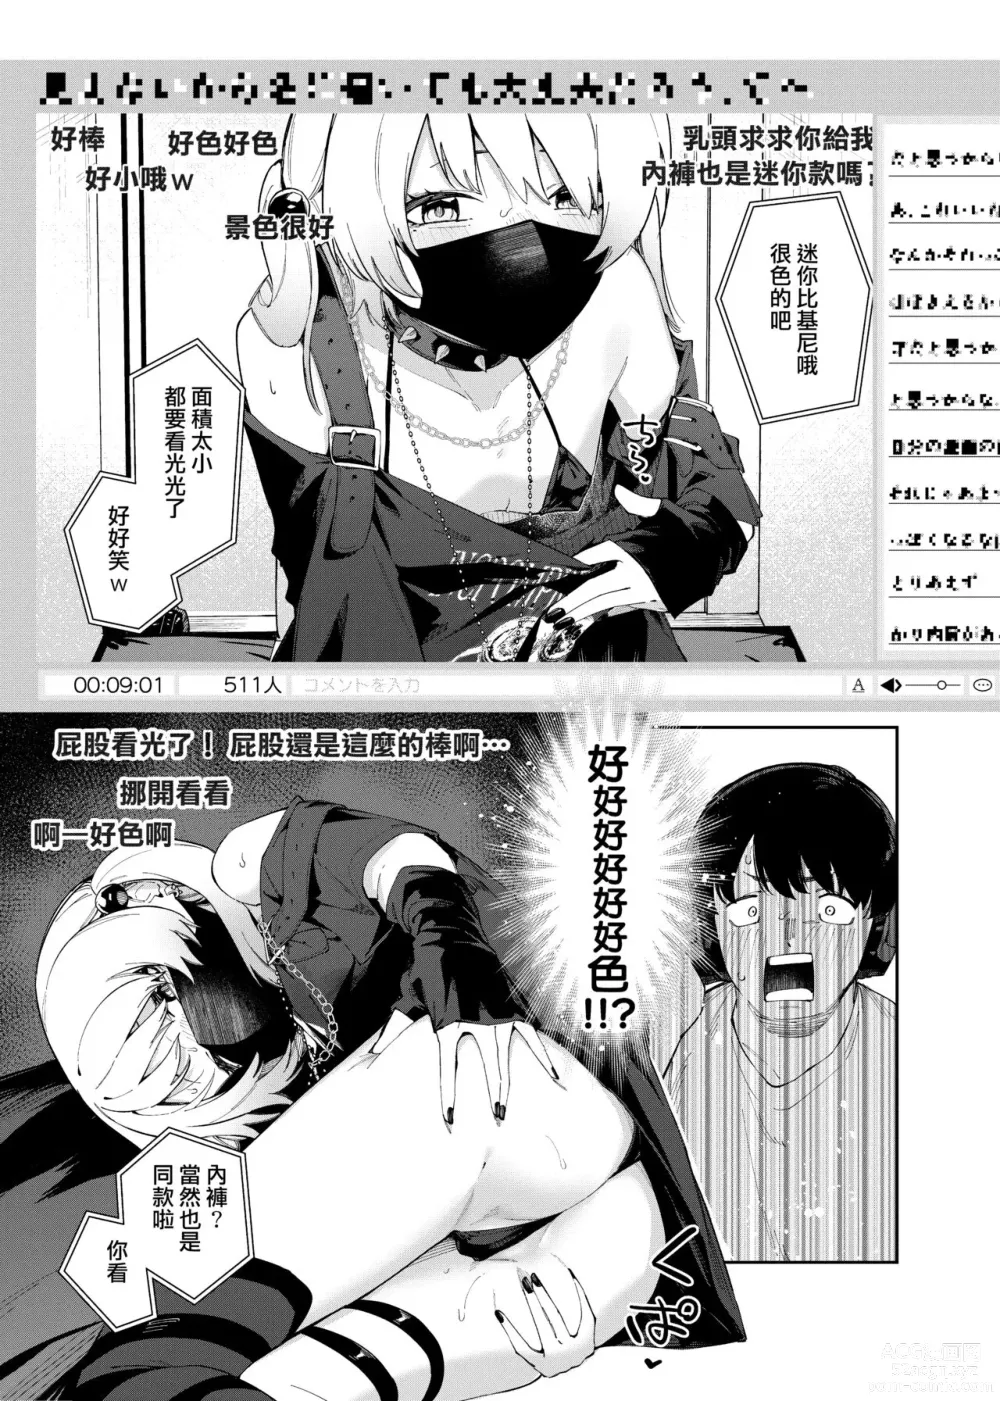 Page 7 of manga rinzin ha yuumei haisin sya4 nin me